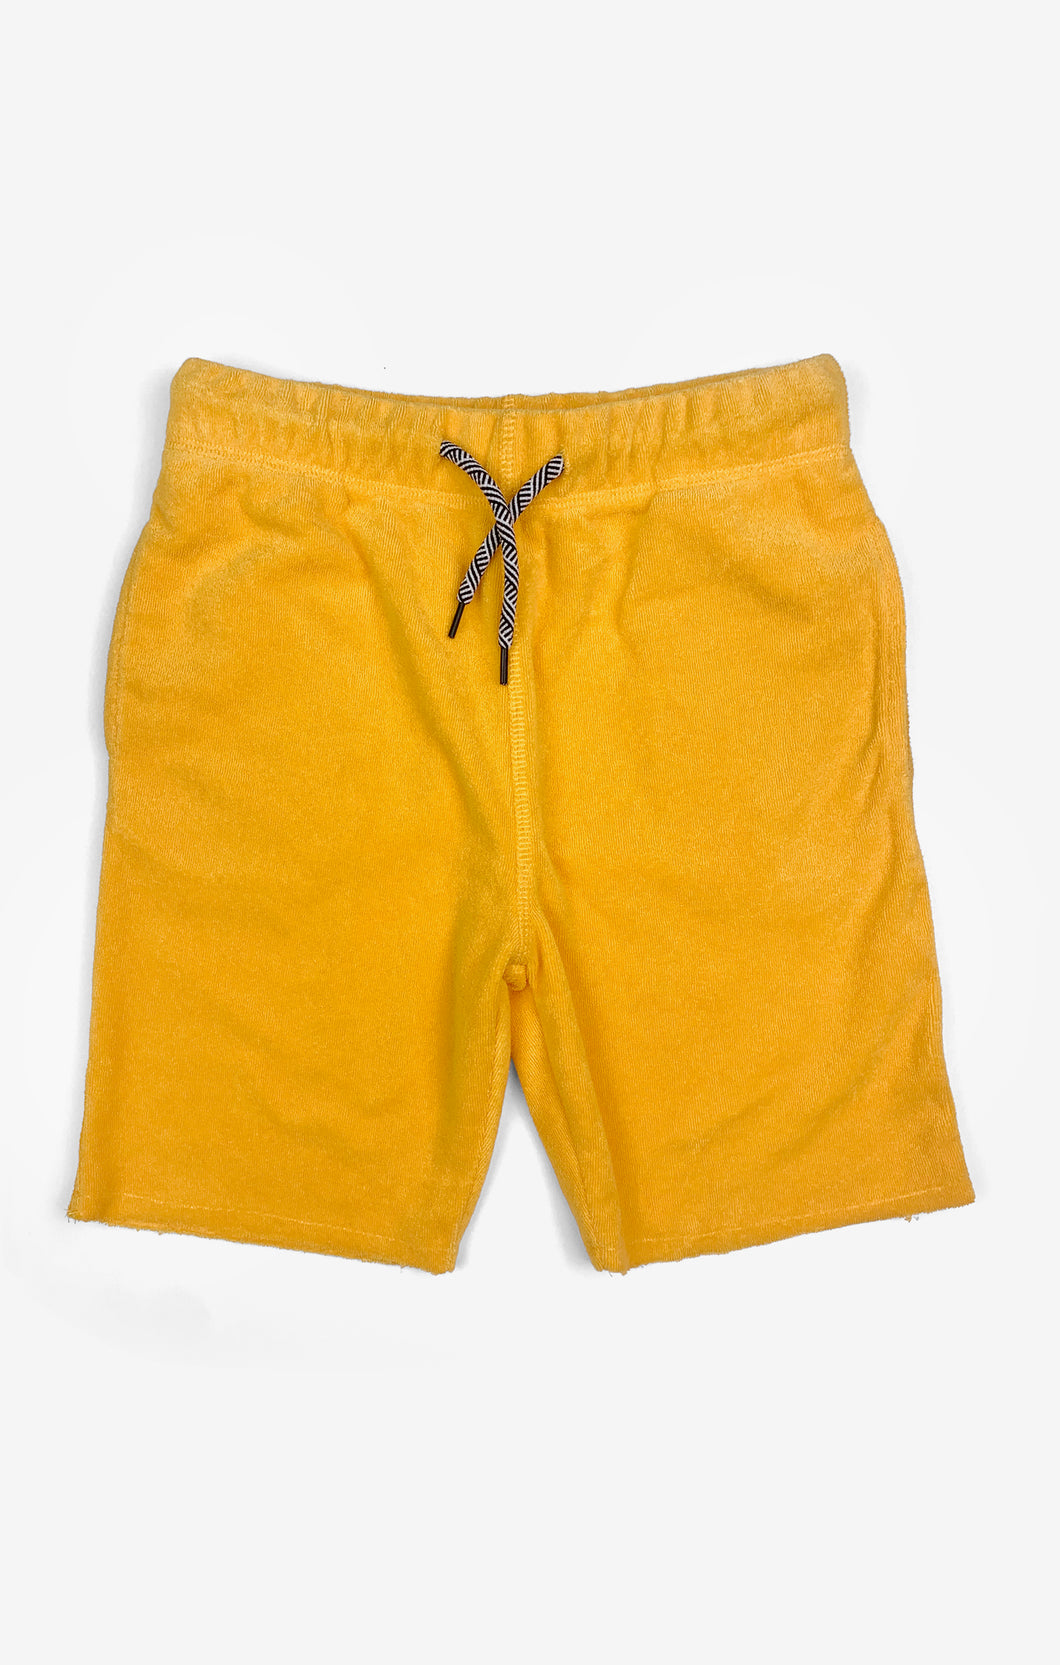 Camp Shorts - Gold